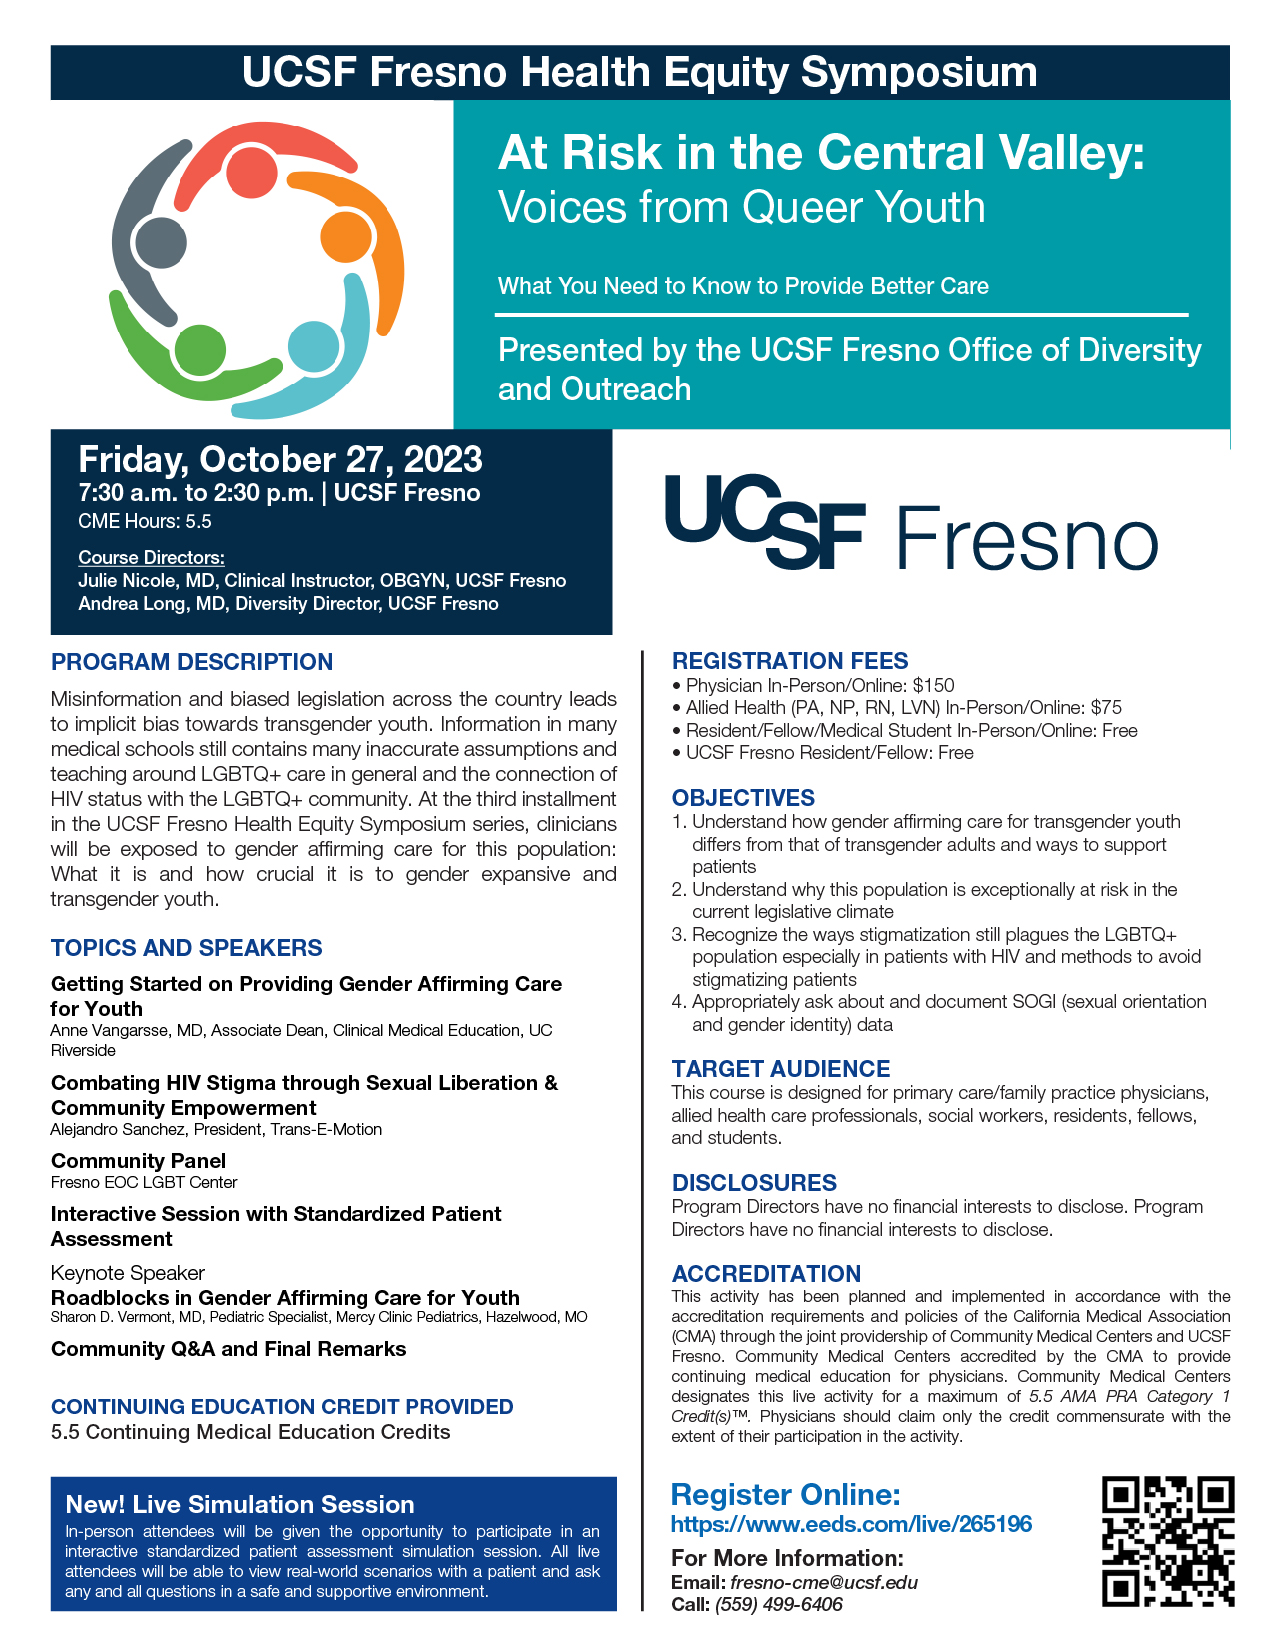 Health Equity Symposium Flyer